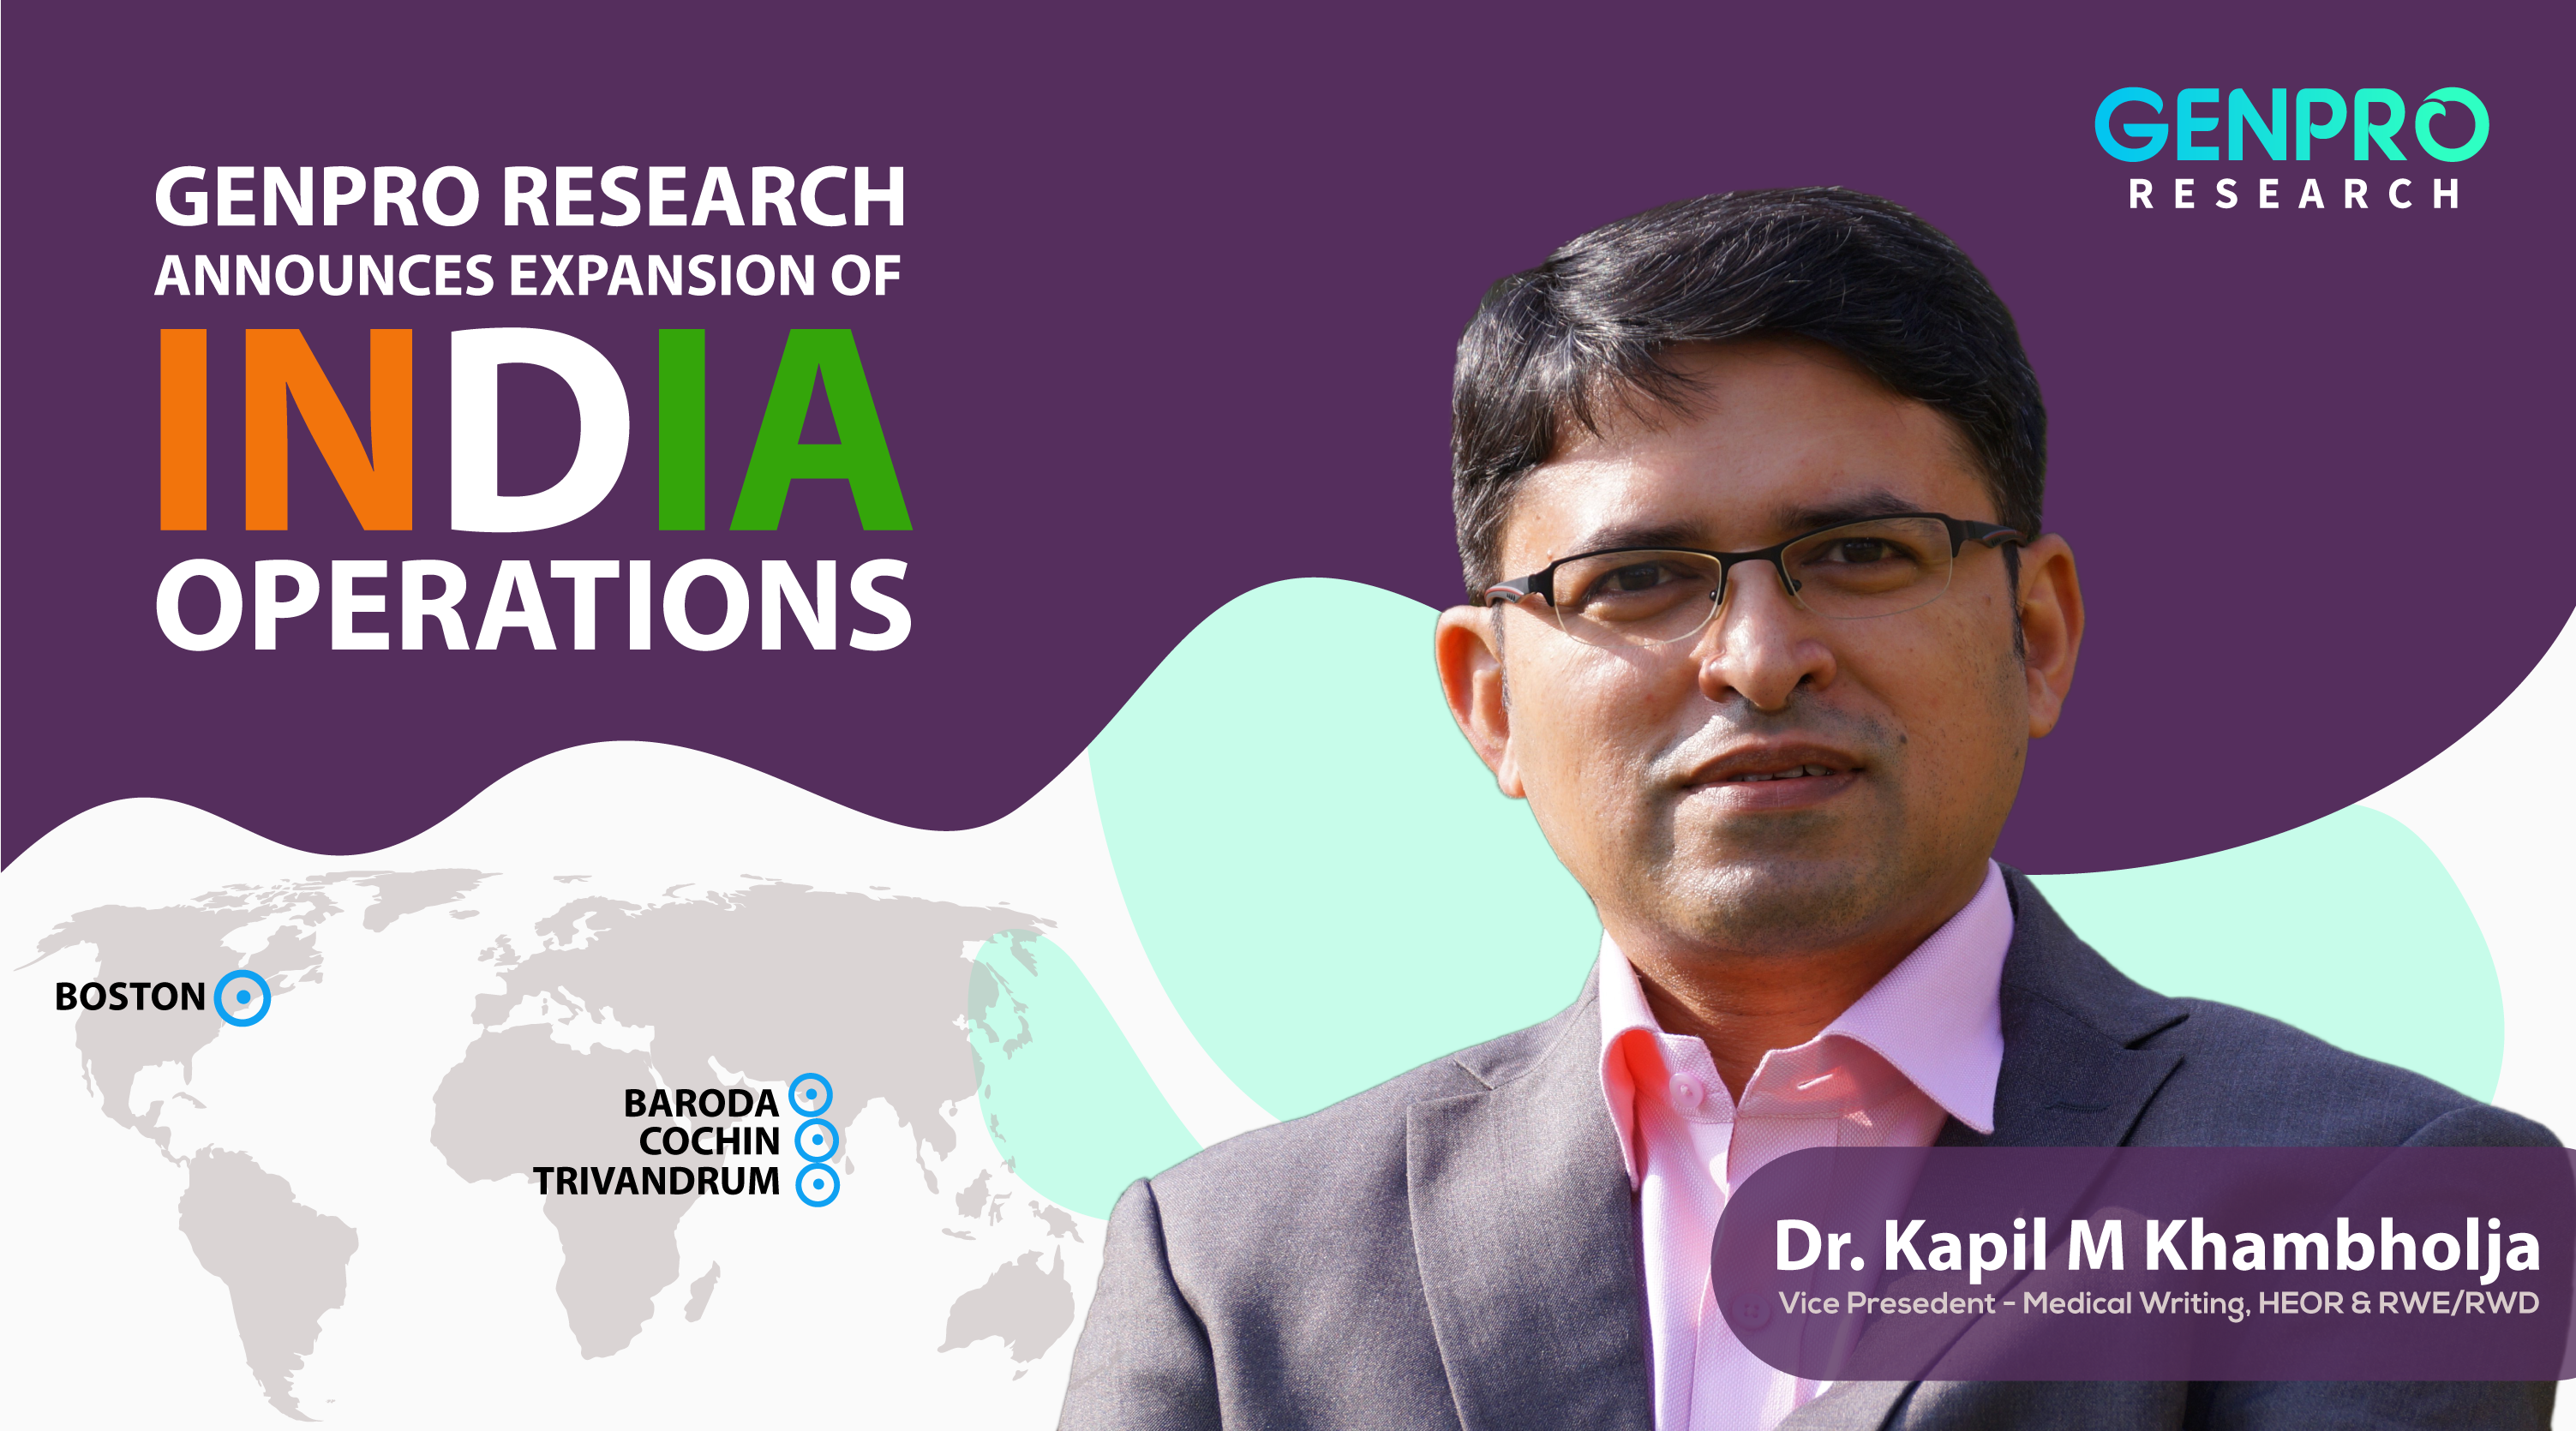 Dr Kapil Khambholja - VP Medical Writing, Genpro Research